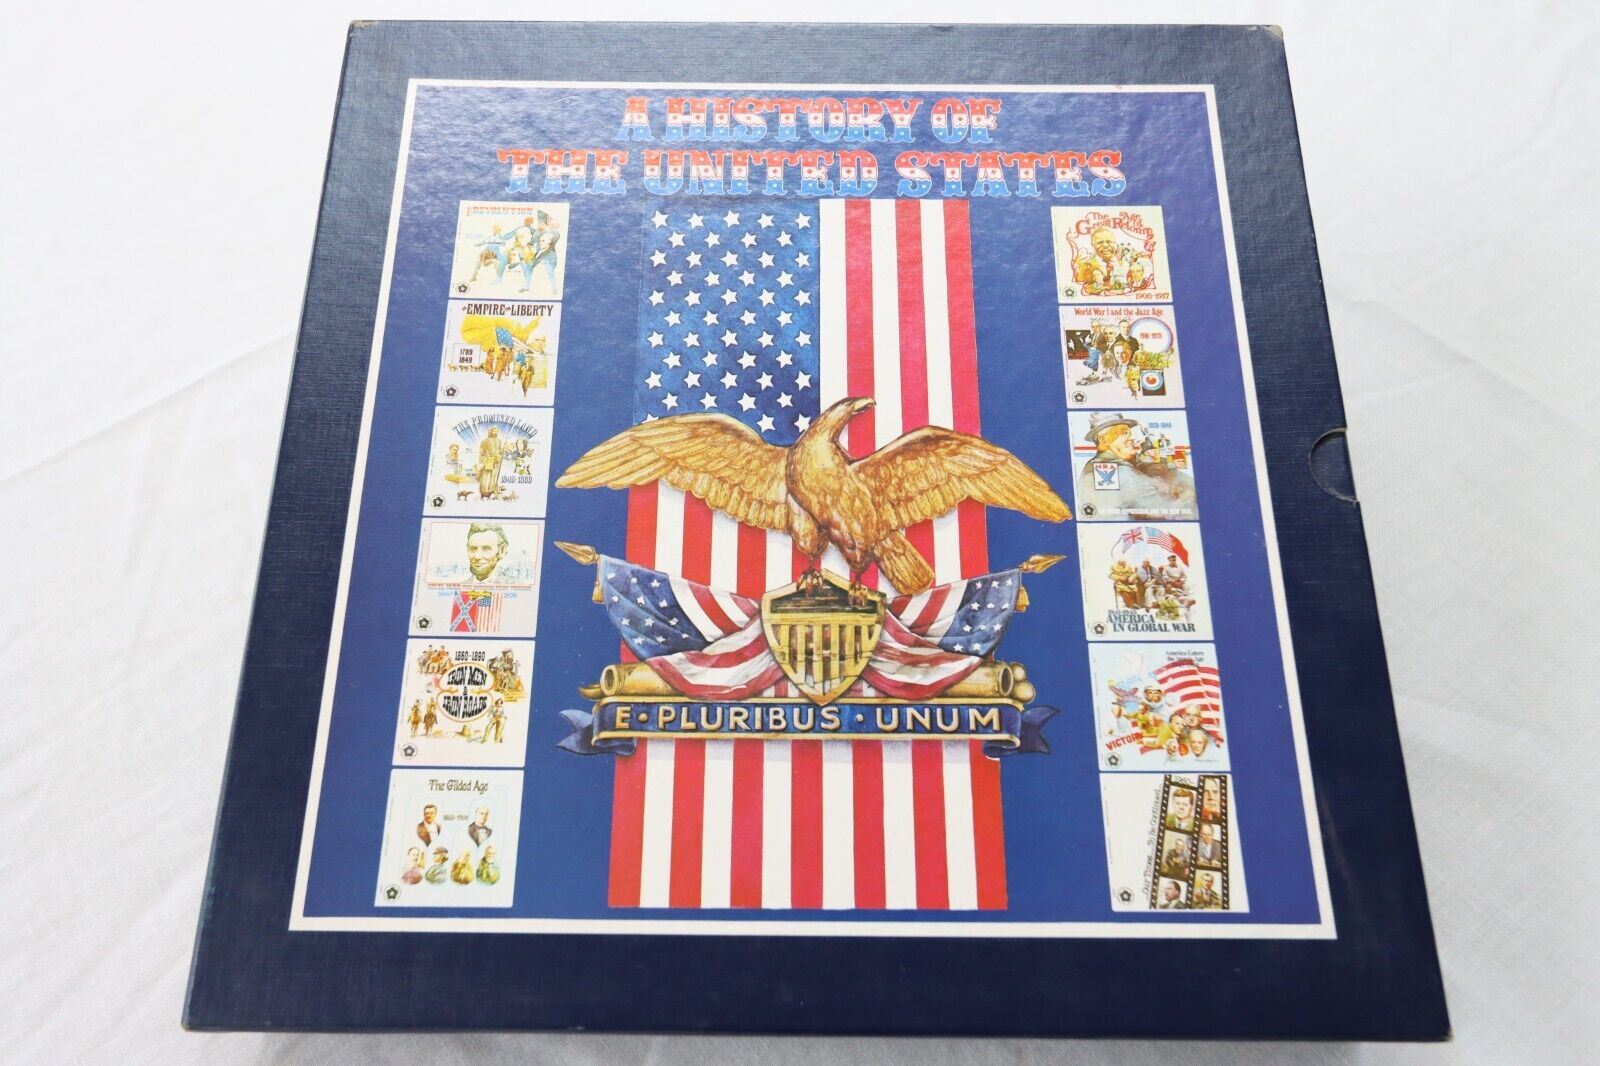 A History of the United States 12 Vol. LP Vinyl Record Box Set Columbia Records